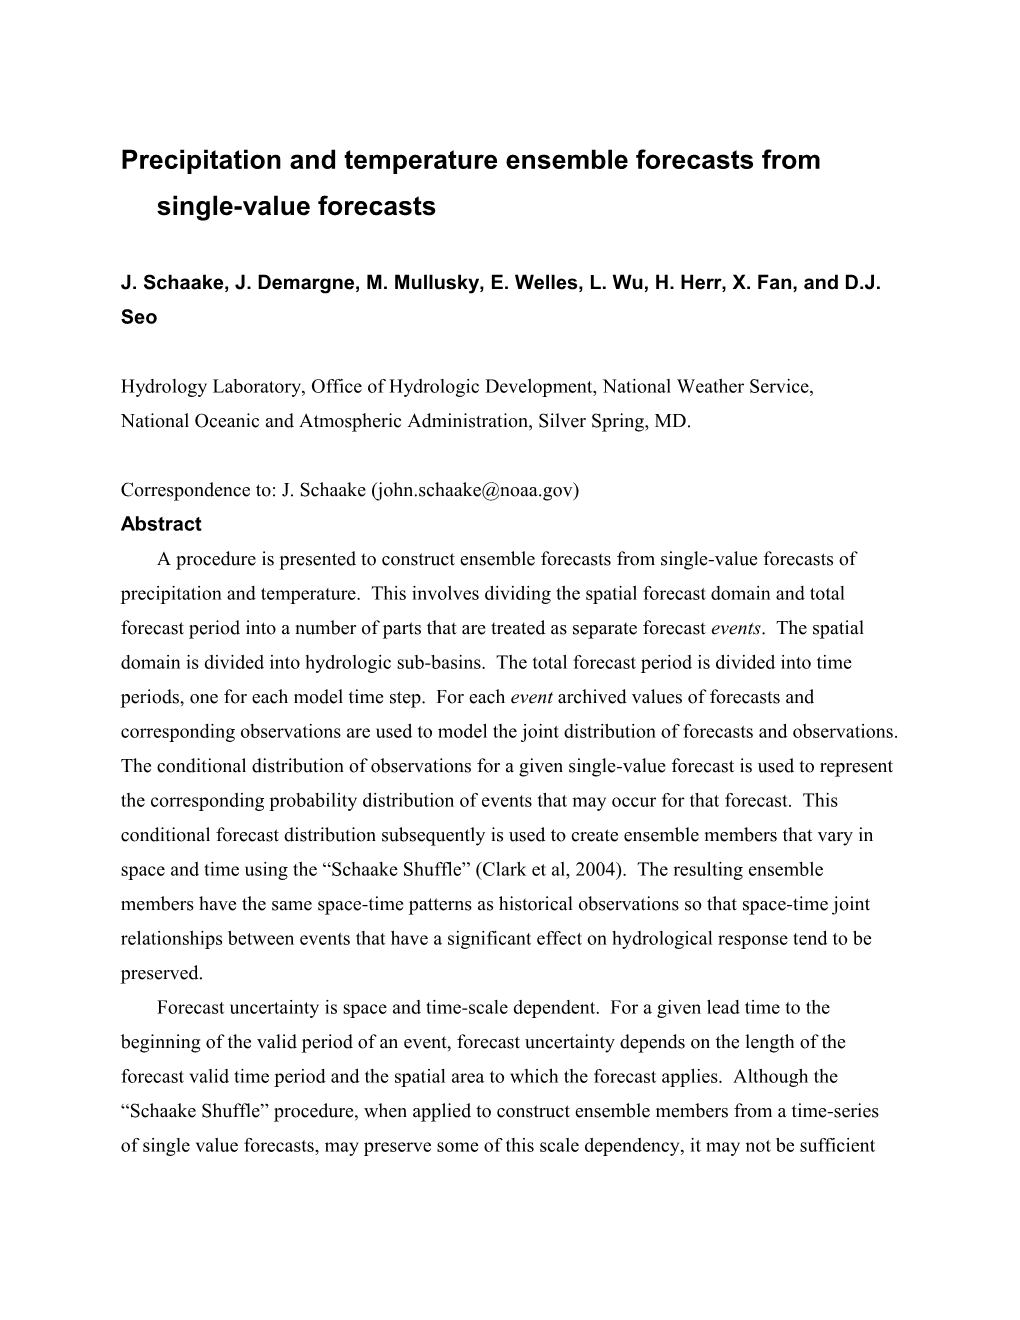 Precipitation And Temperature Short Term Ensemble Forecasts: Theory